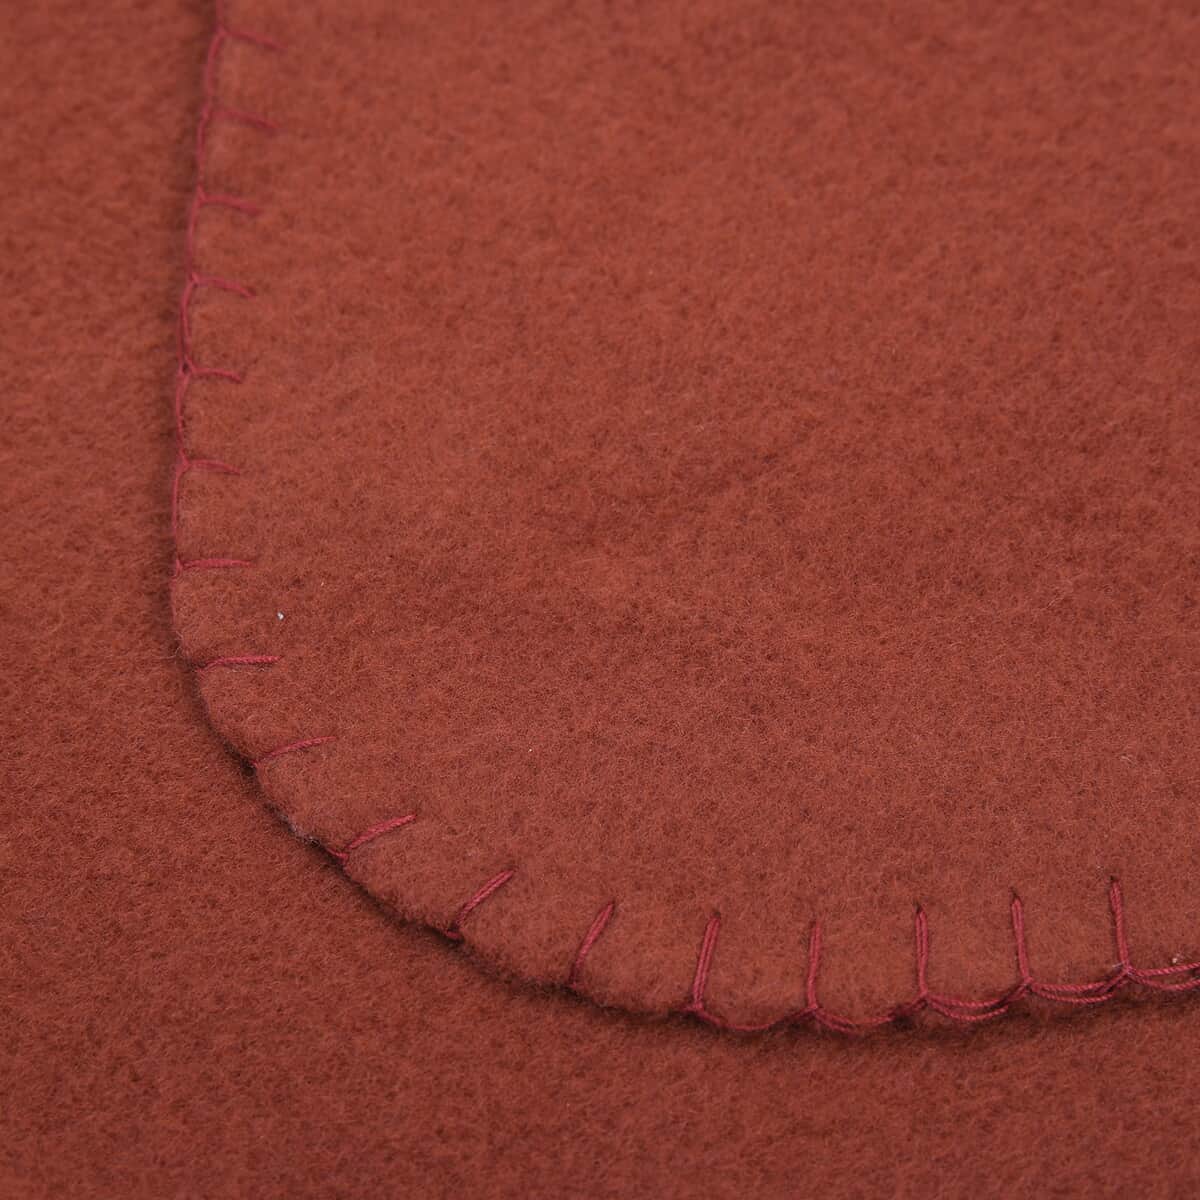 HOMESMART 2 in 1 Red Solid Fleece Travel Blanket (51"X67") with Folded Storage Pocket (Microfiber) image number 3